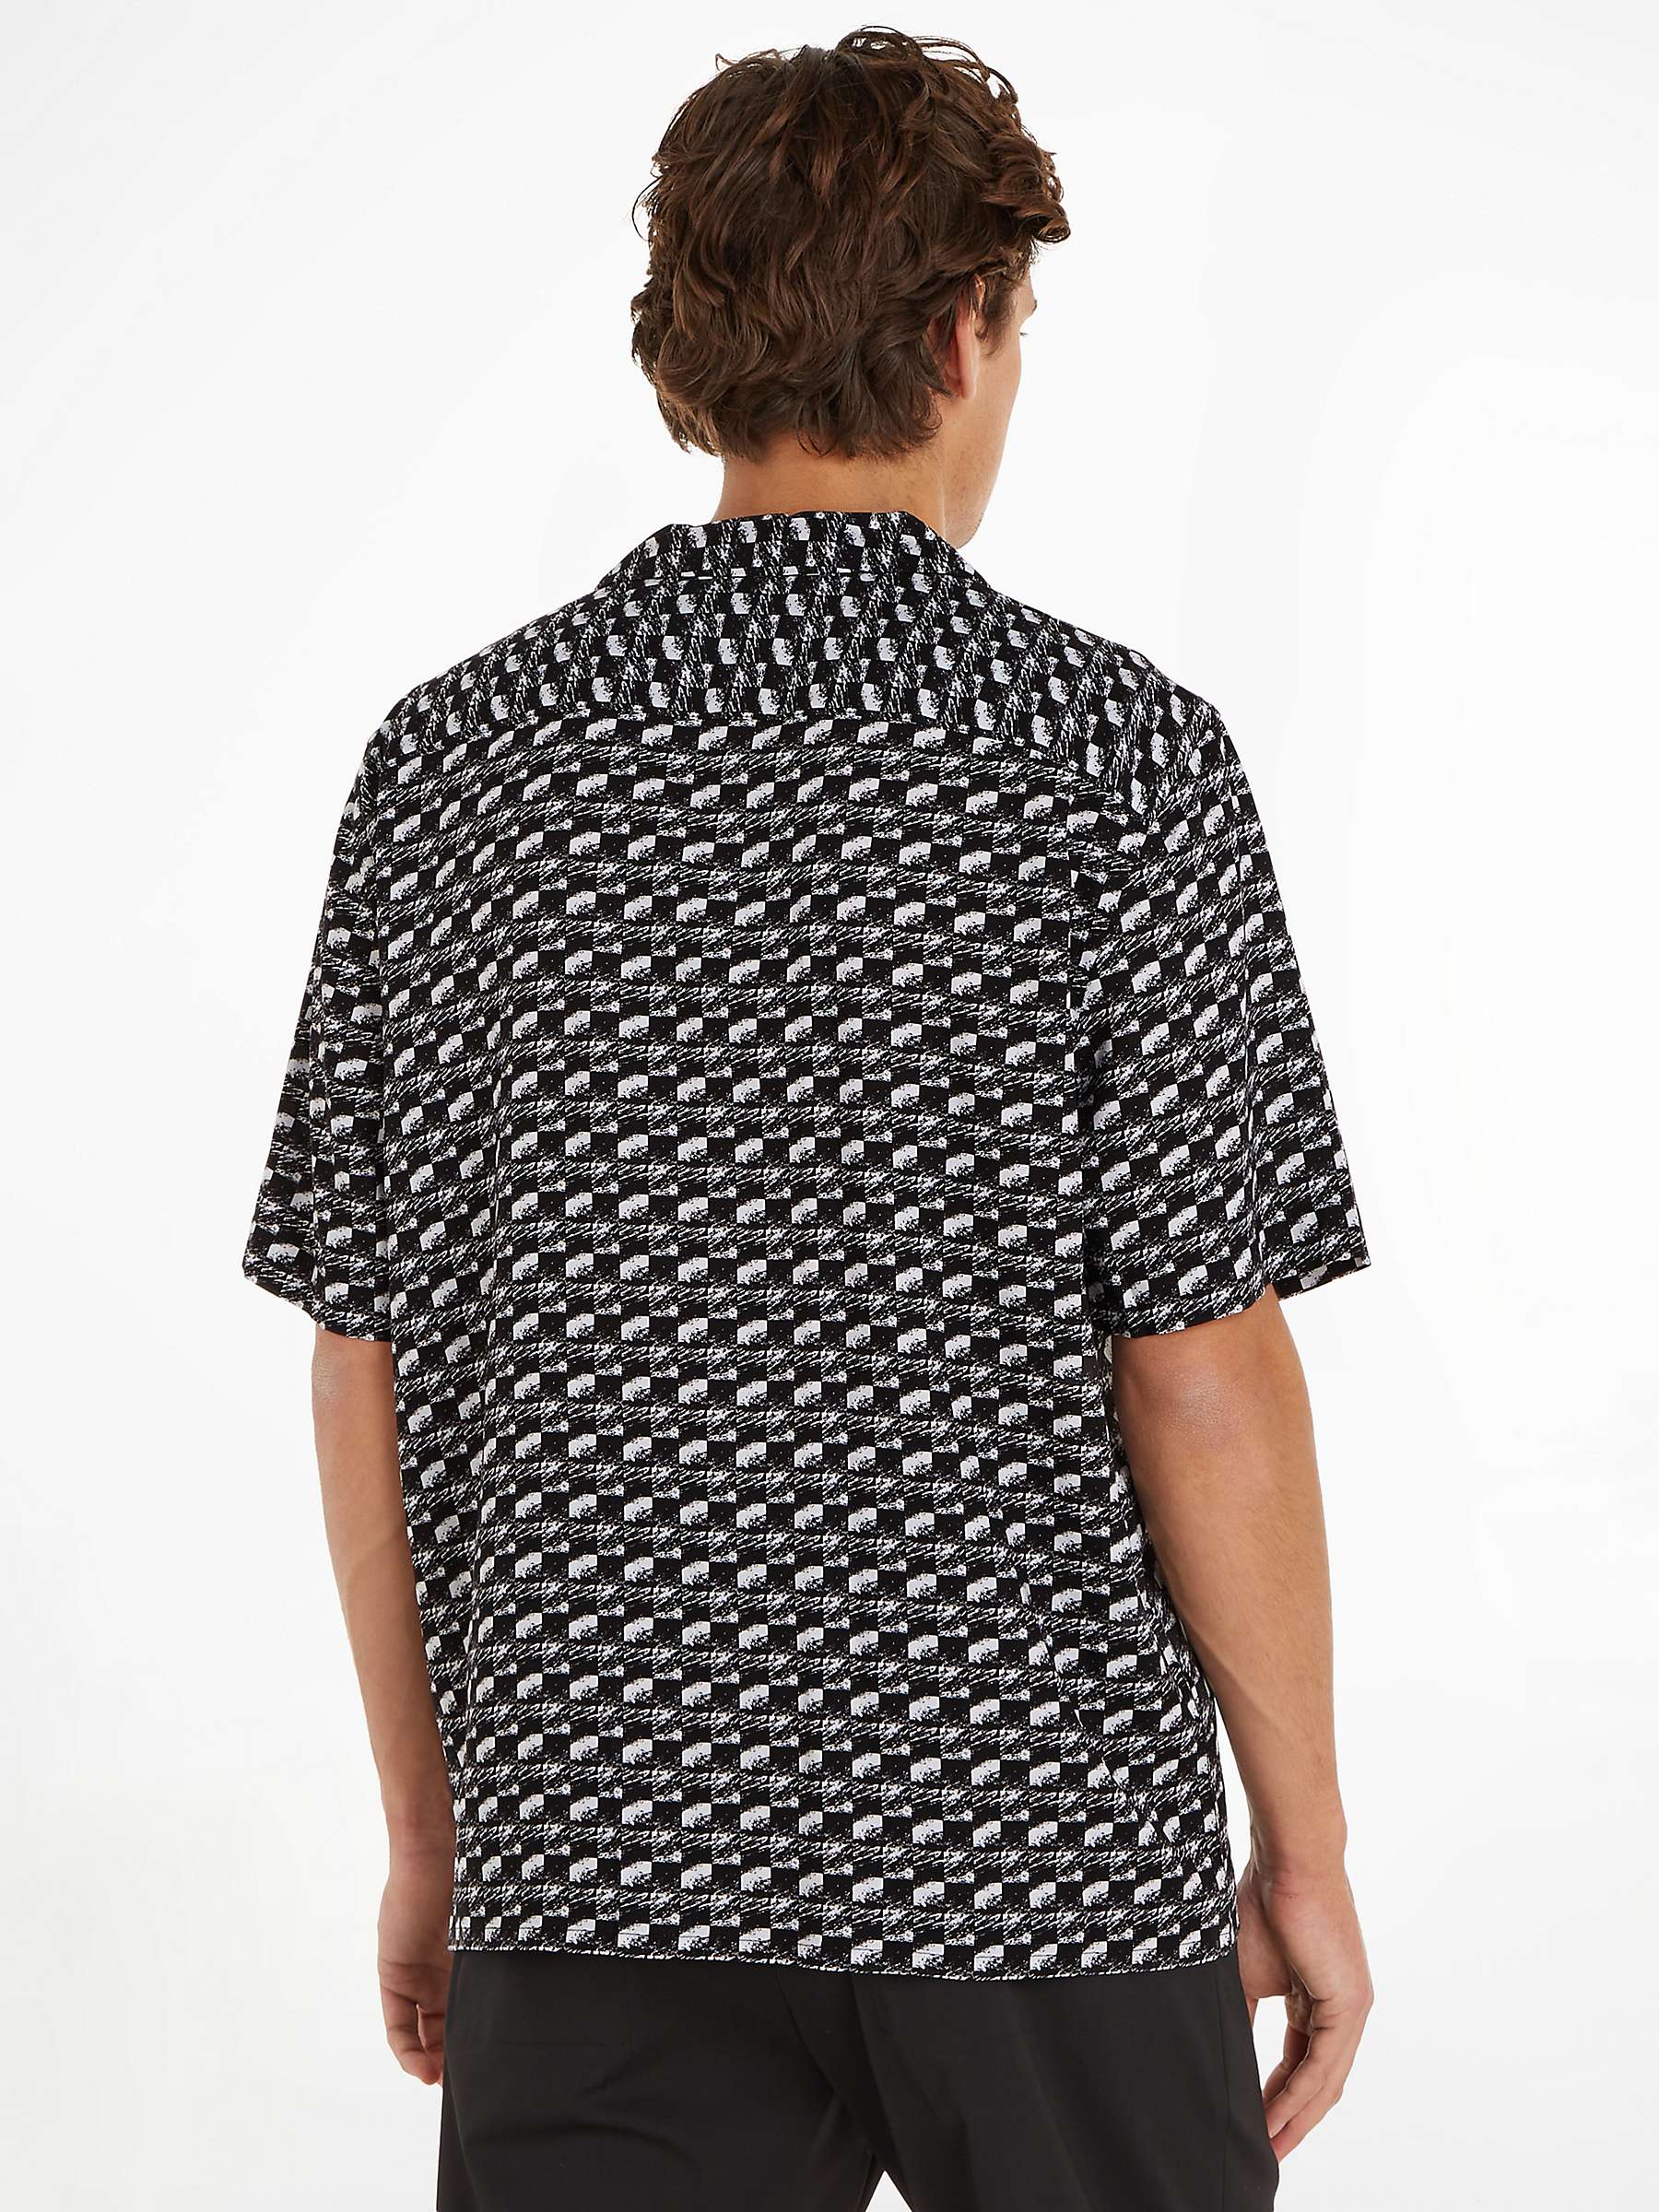 Buy Calvin Klein Short Sleeve Bowling Shirt, Black Online at johnlewis.com